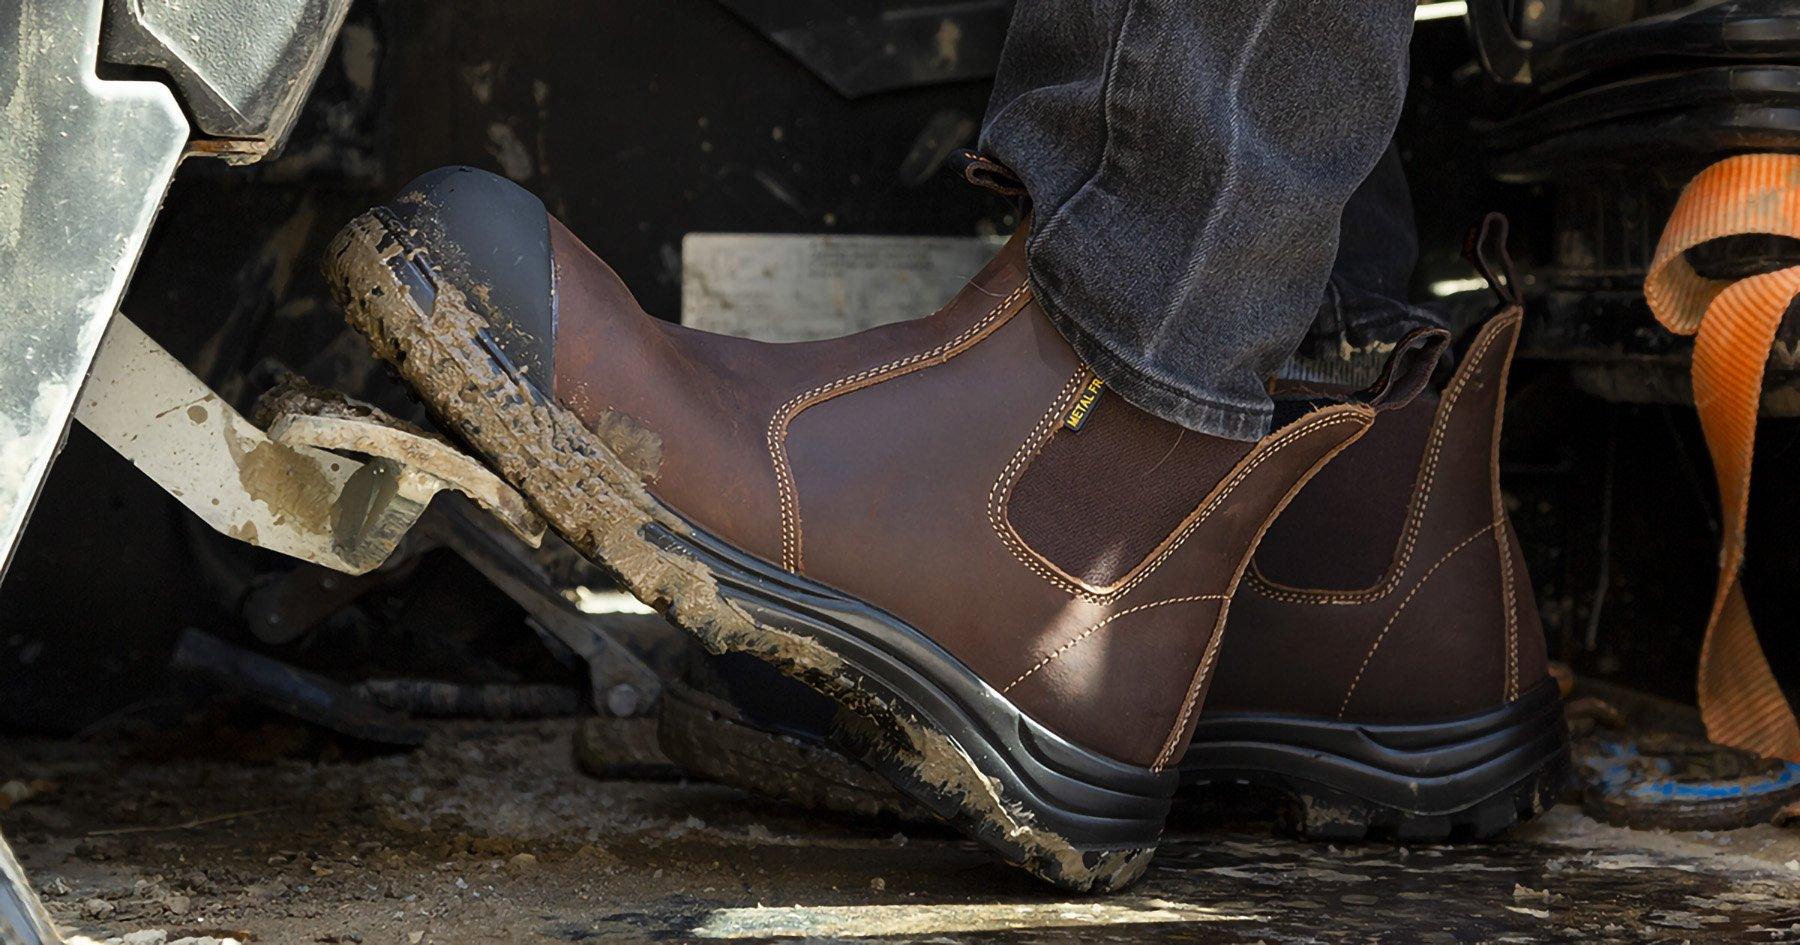 Steel toe Boots for Men - MooseLog